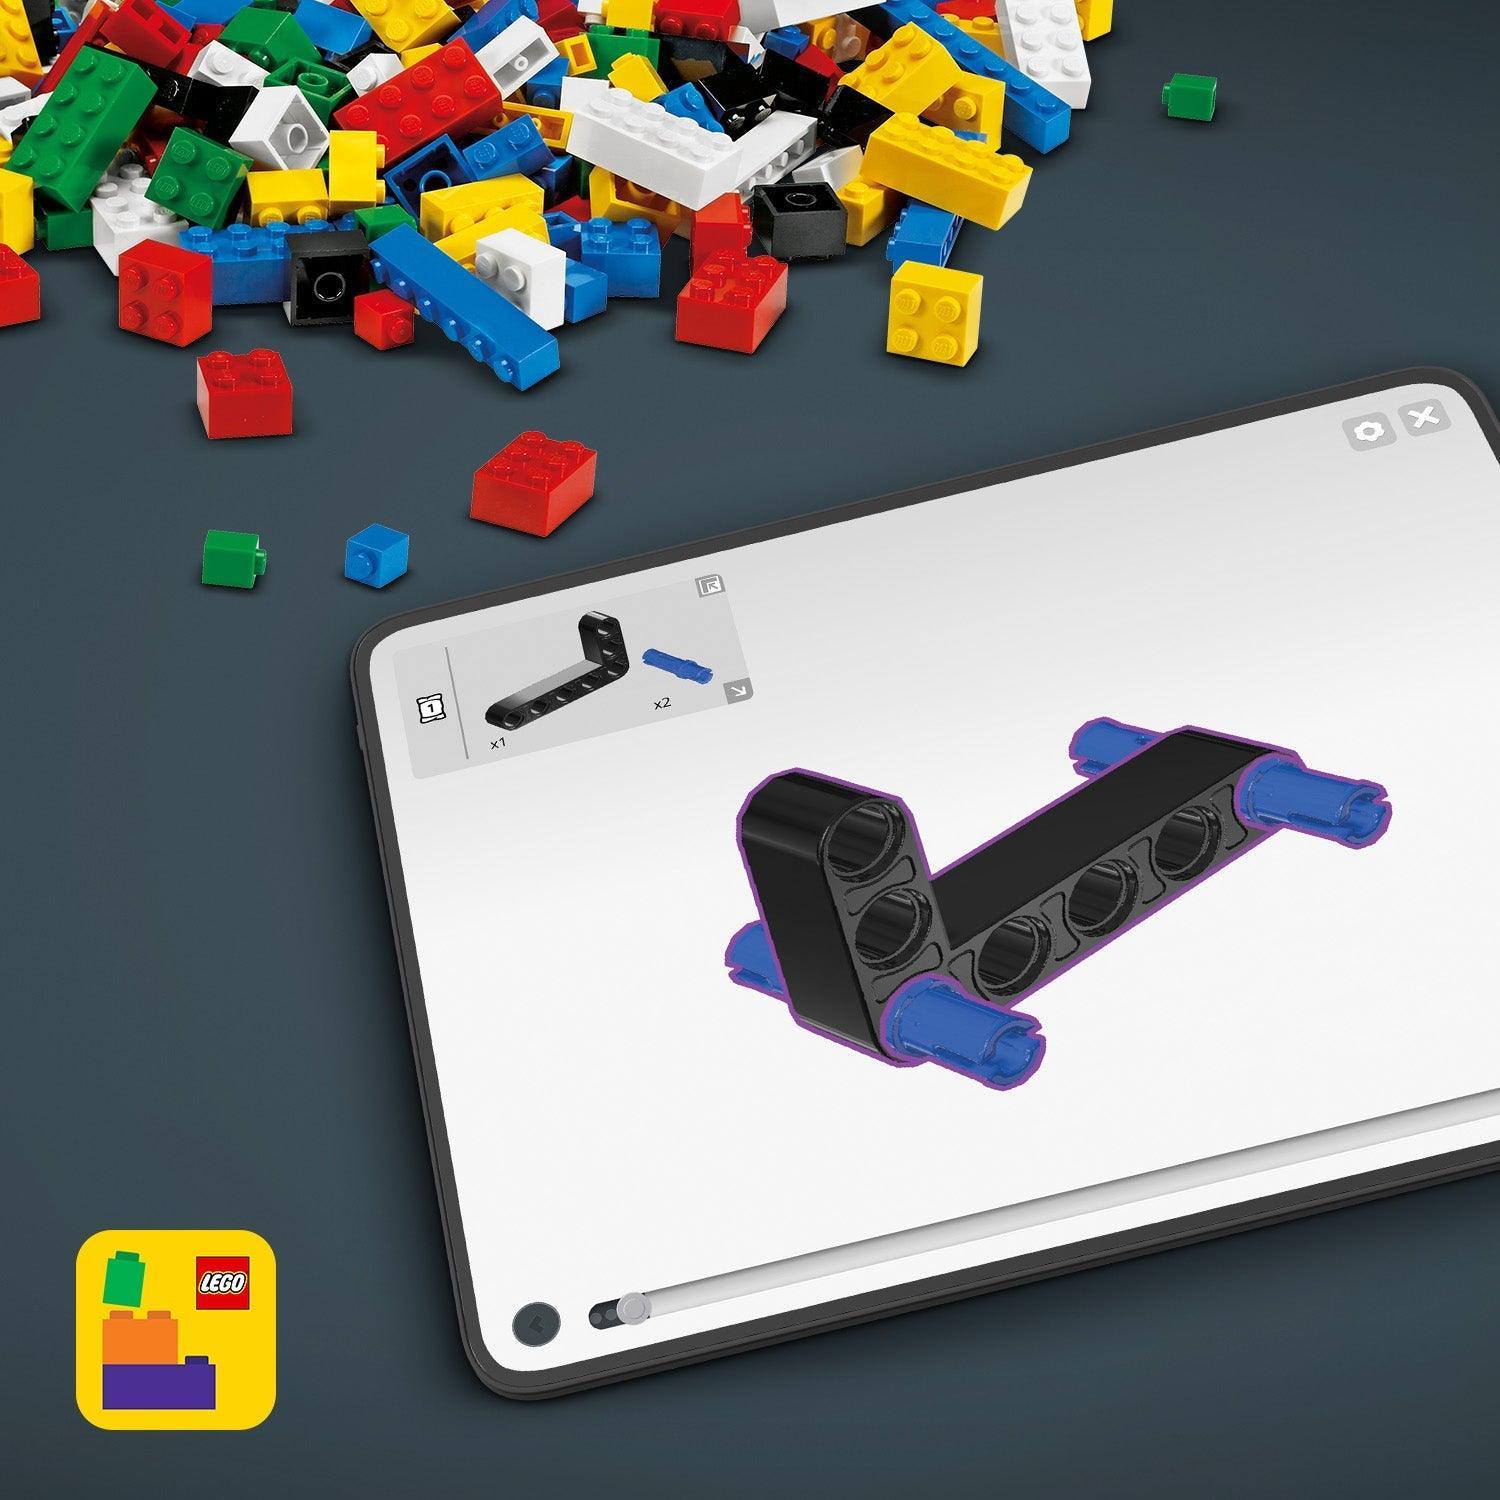 LEGO Heavy-Duty Bulldozer 42163 Technic LEGO TECHNIC @ 2TTOYS LEGO €. 8.49